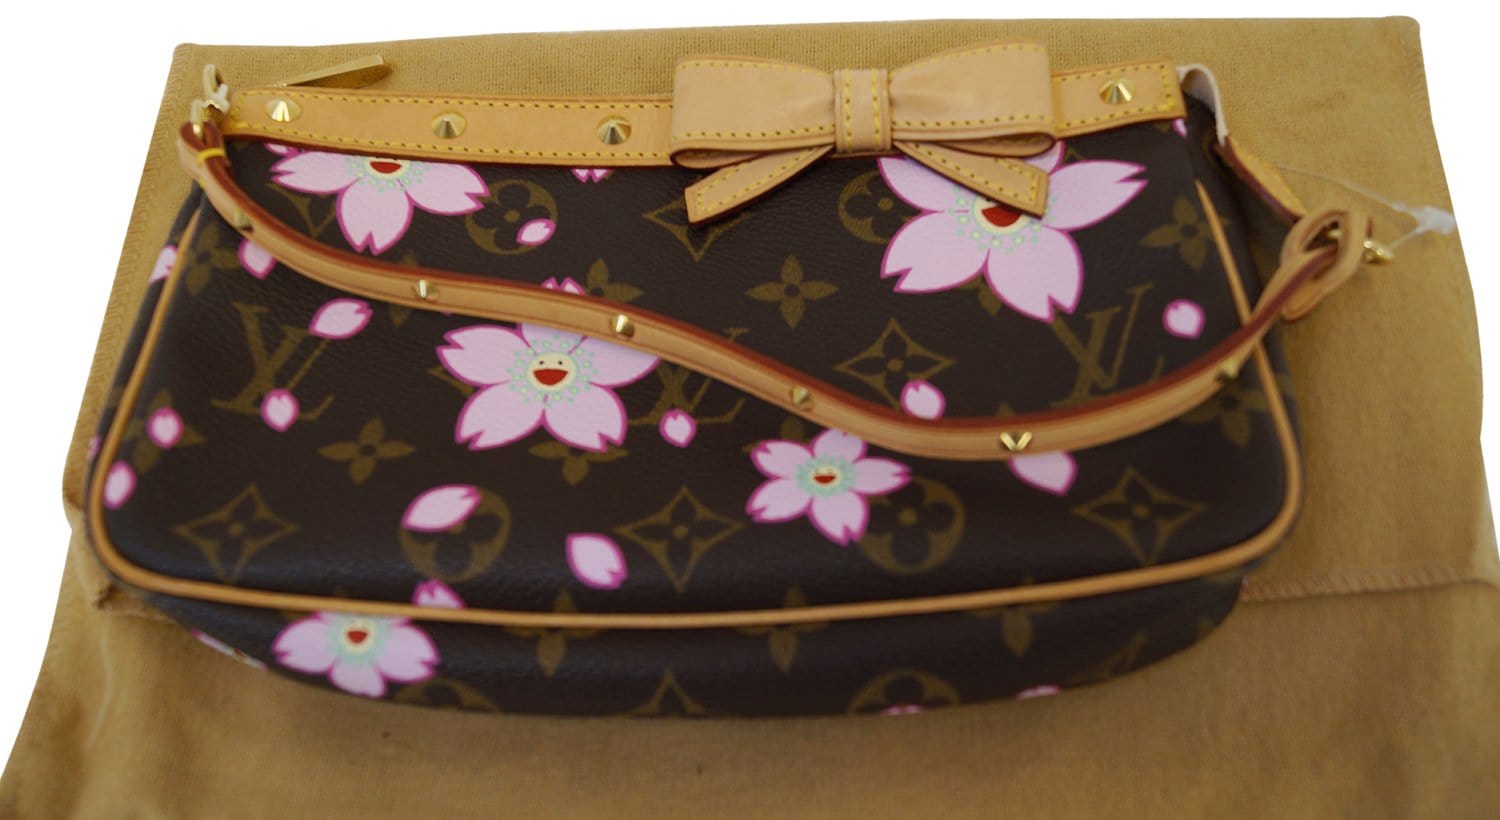 FWRD Renew Louis Vuitton Monogram Cherry Blossom Pochette